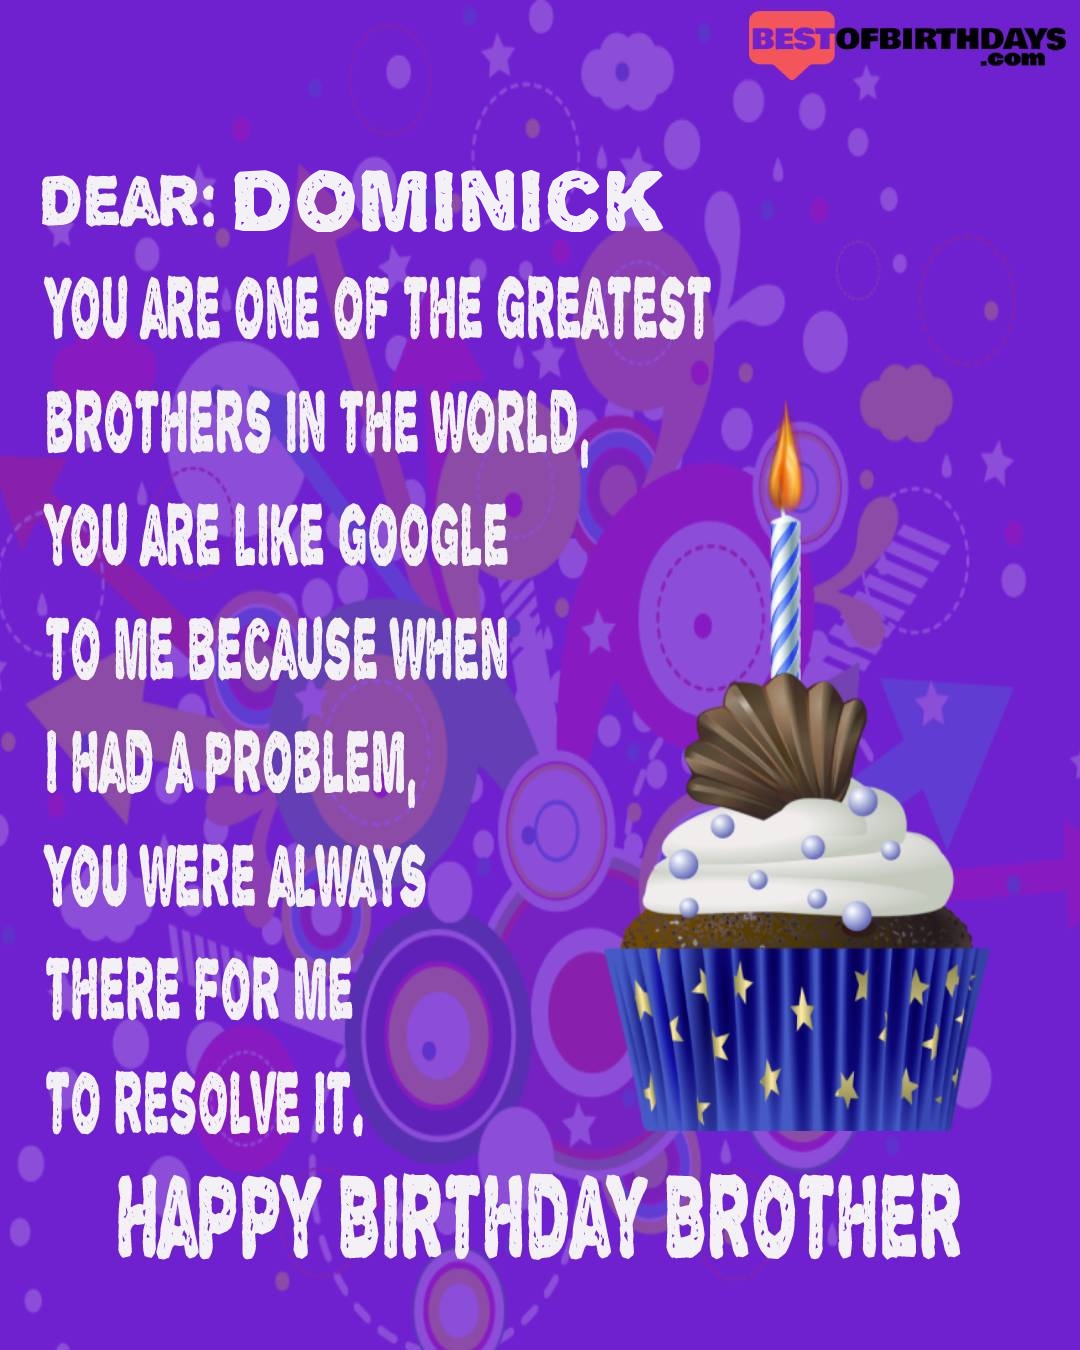 Happy birthday dominick bhai brother bro